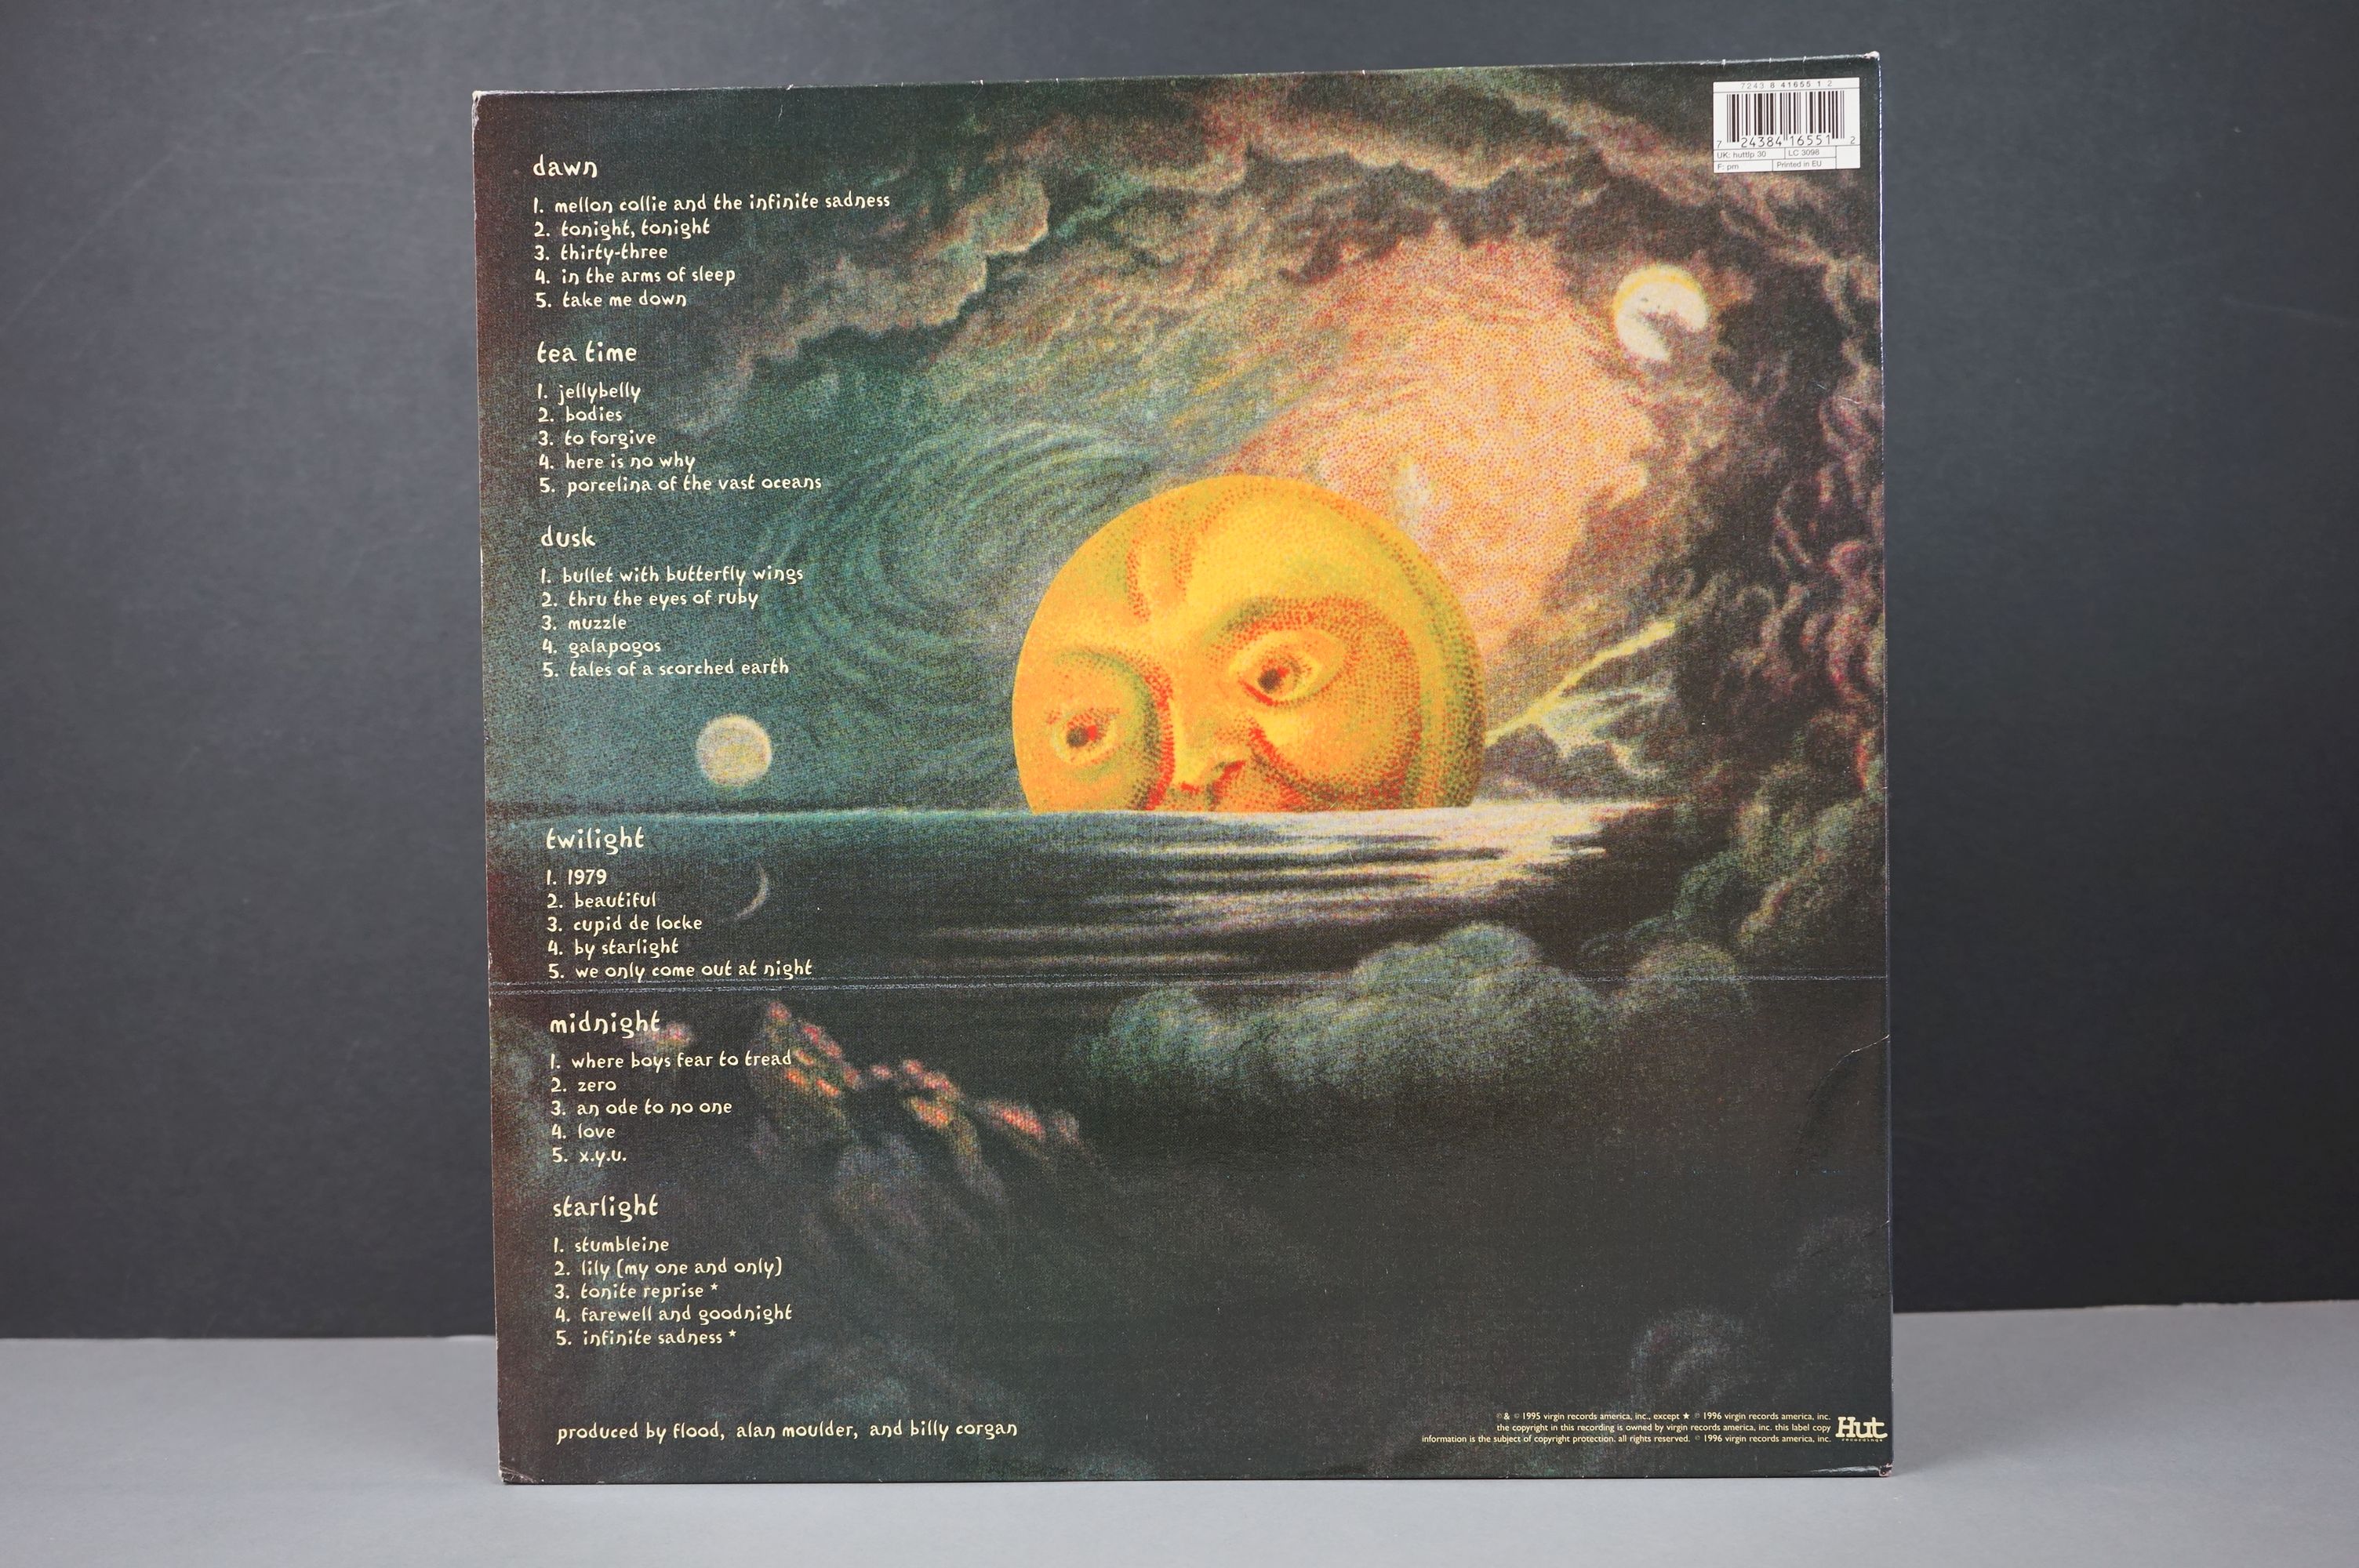 Vinyl - The Smashing Pumpkins Mellon Collie and the Infinite Sadness 3 LP on Hut, HUTLP30, - Image 3 of 12